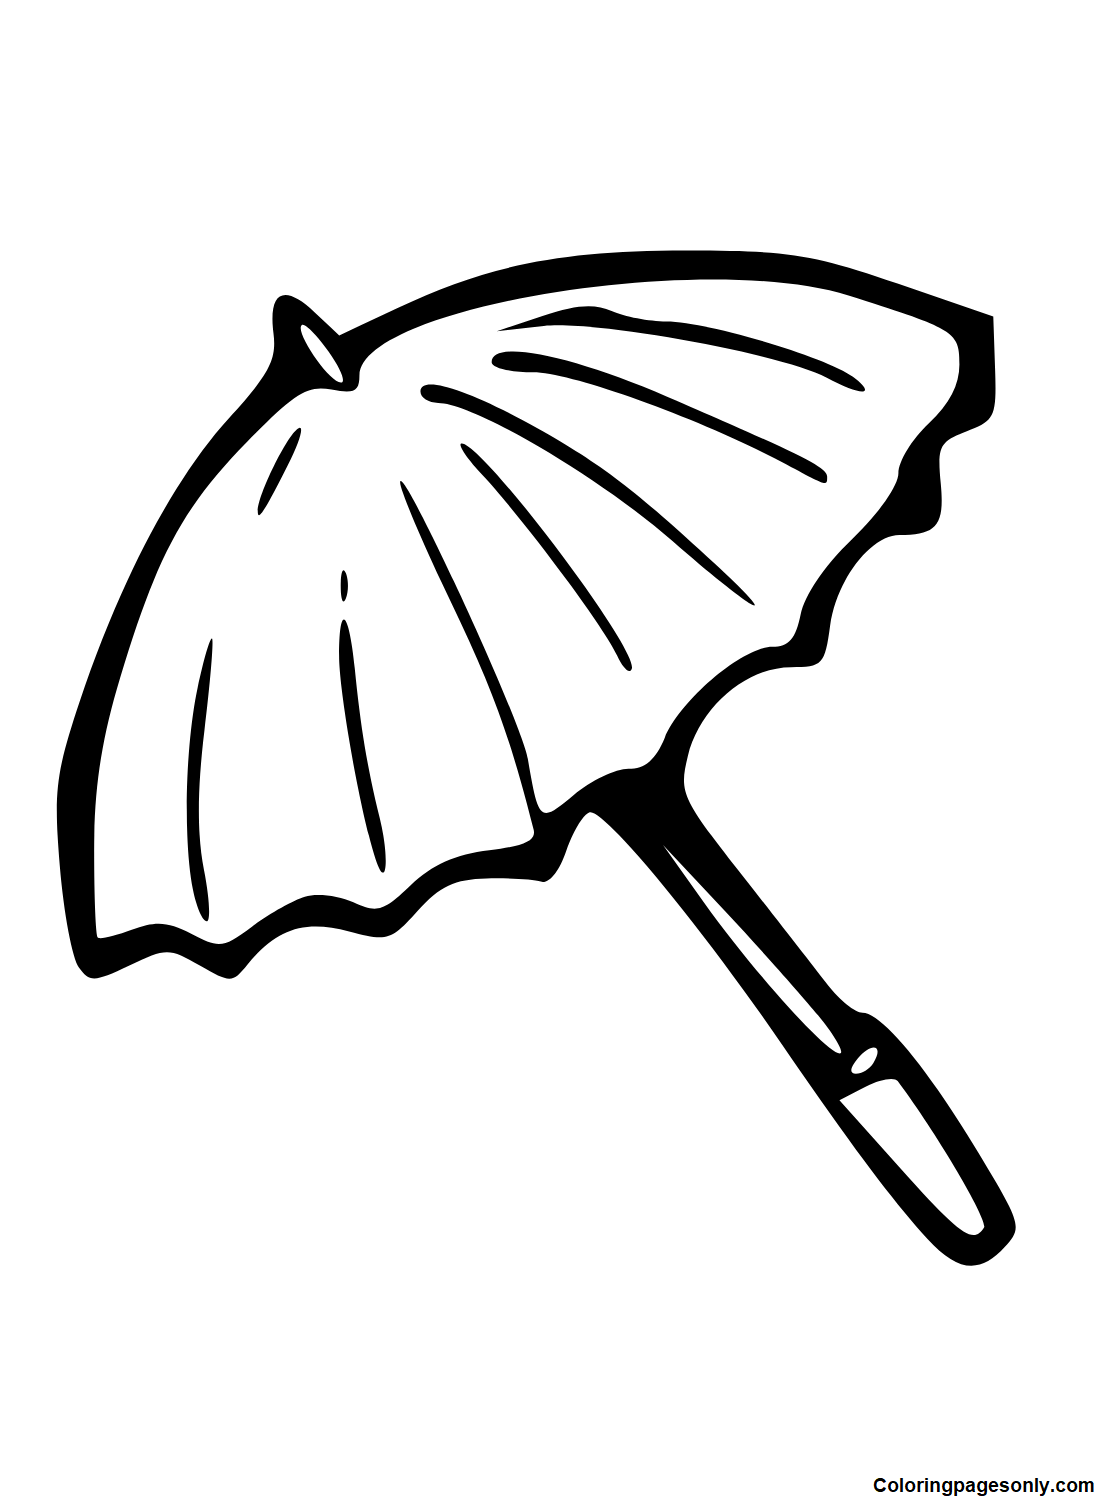 Open Umbrella from Umbrella